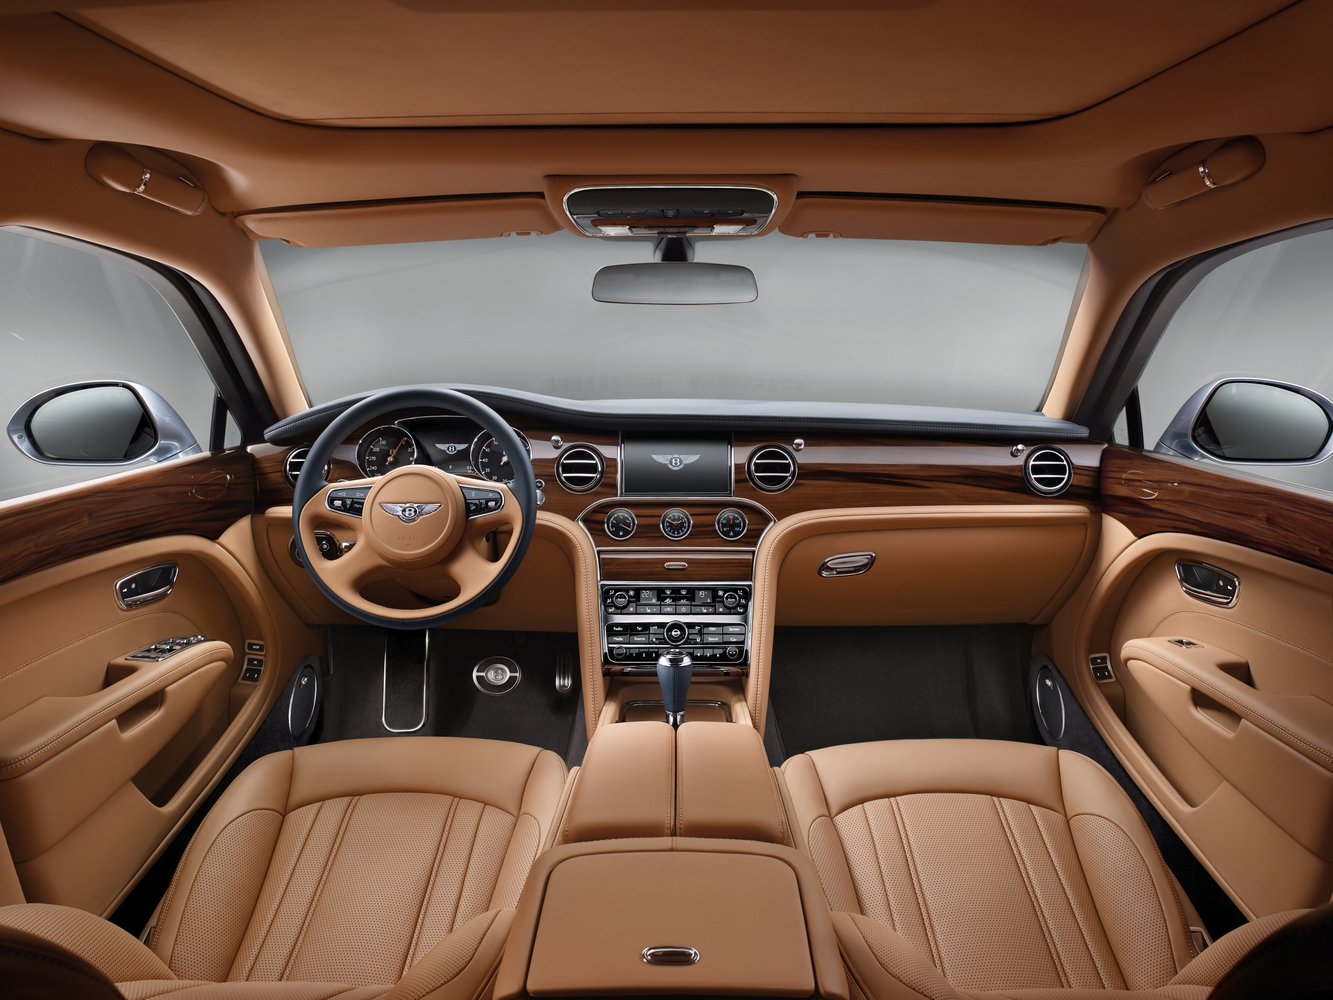 седан Bentley Mulsanne 2016г выпуска модификация 6.8 AT (512 л.с.)